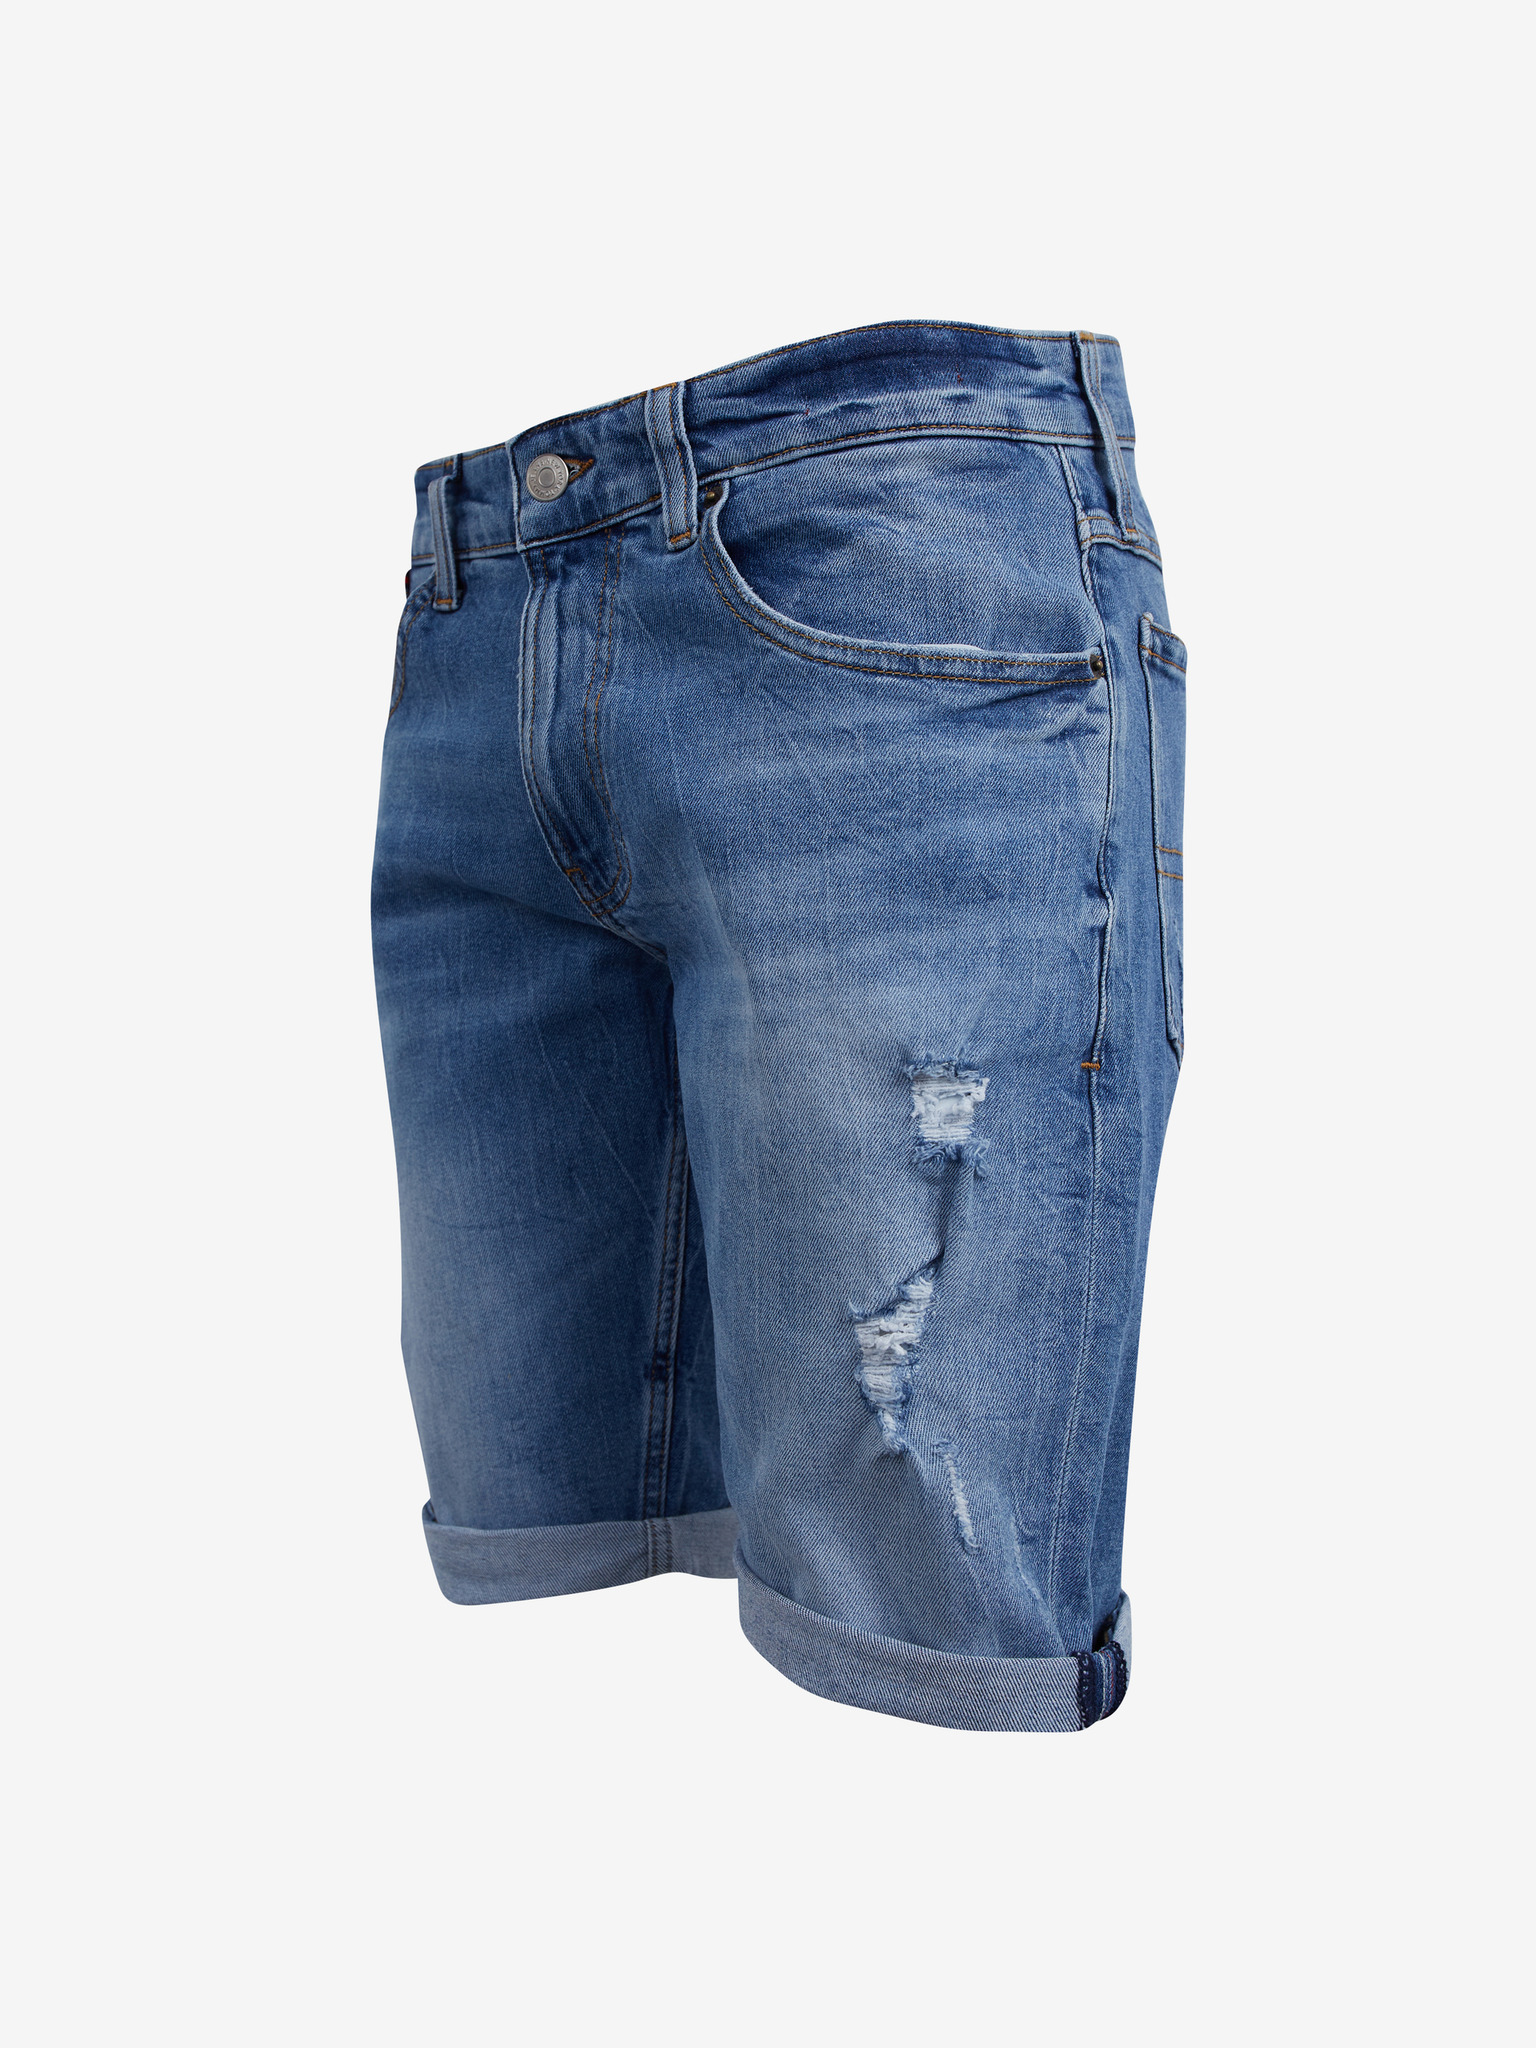 Men Jeans Shorts Black Blue Elastic Ripped Short Jeans Denim Shorts at Rs  1808.65 | Koramangala | Bengaluru| ID: 2850572732962